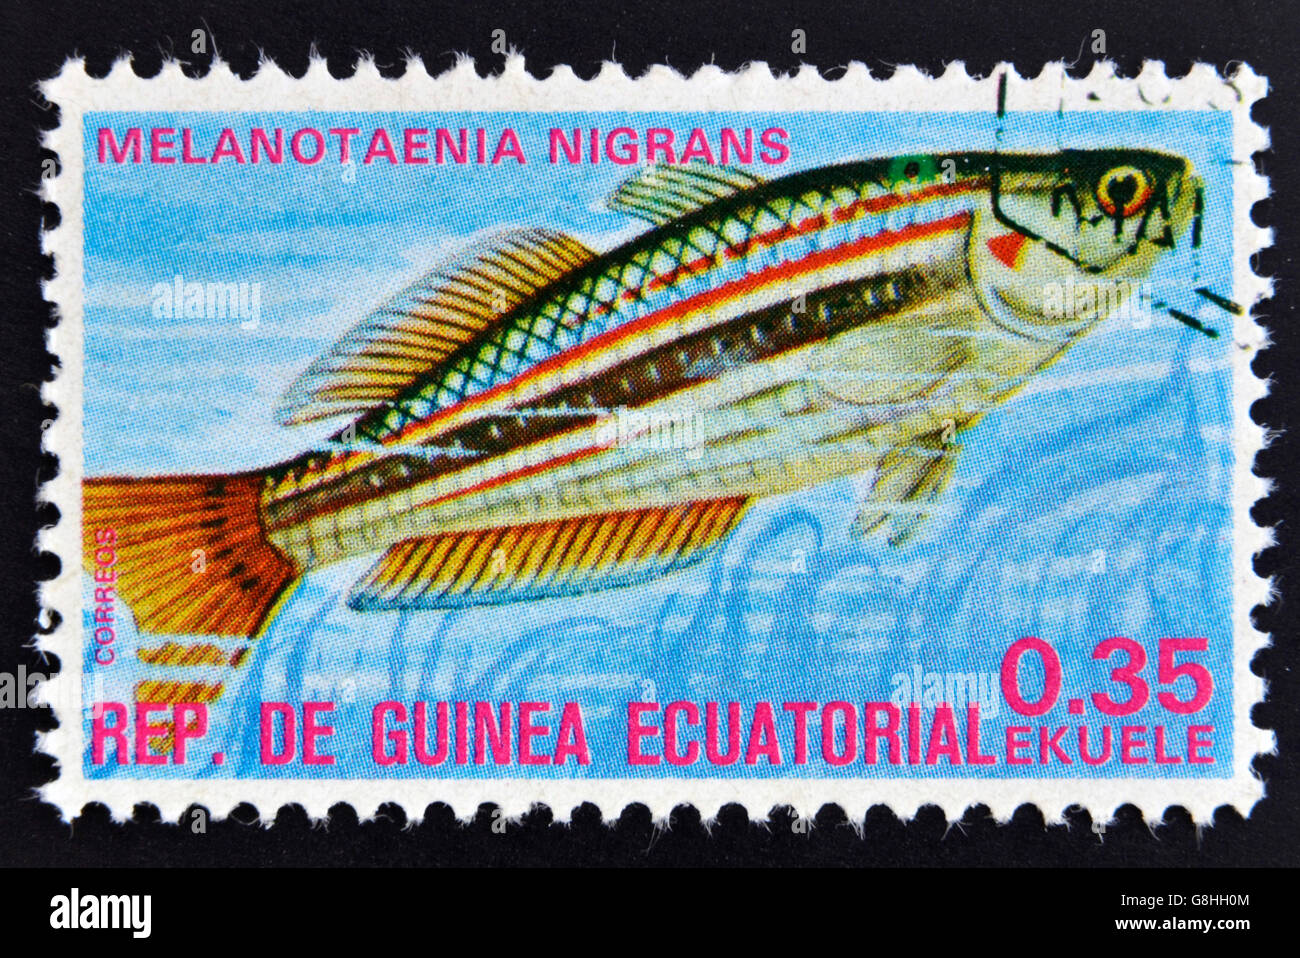 EQUATORIAL GUINEA - CIRCA 1974: A stamp printed in Guinea Ecuatorial dedicated to exotic fish shows melanotaenia nigrans, circa Stock Photo